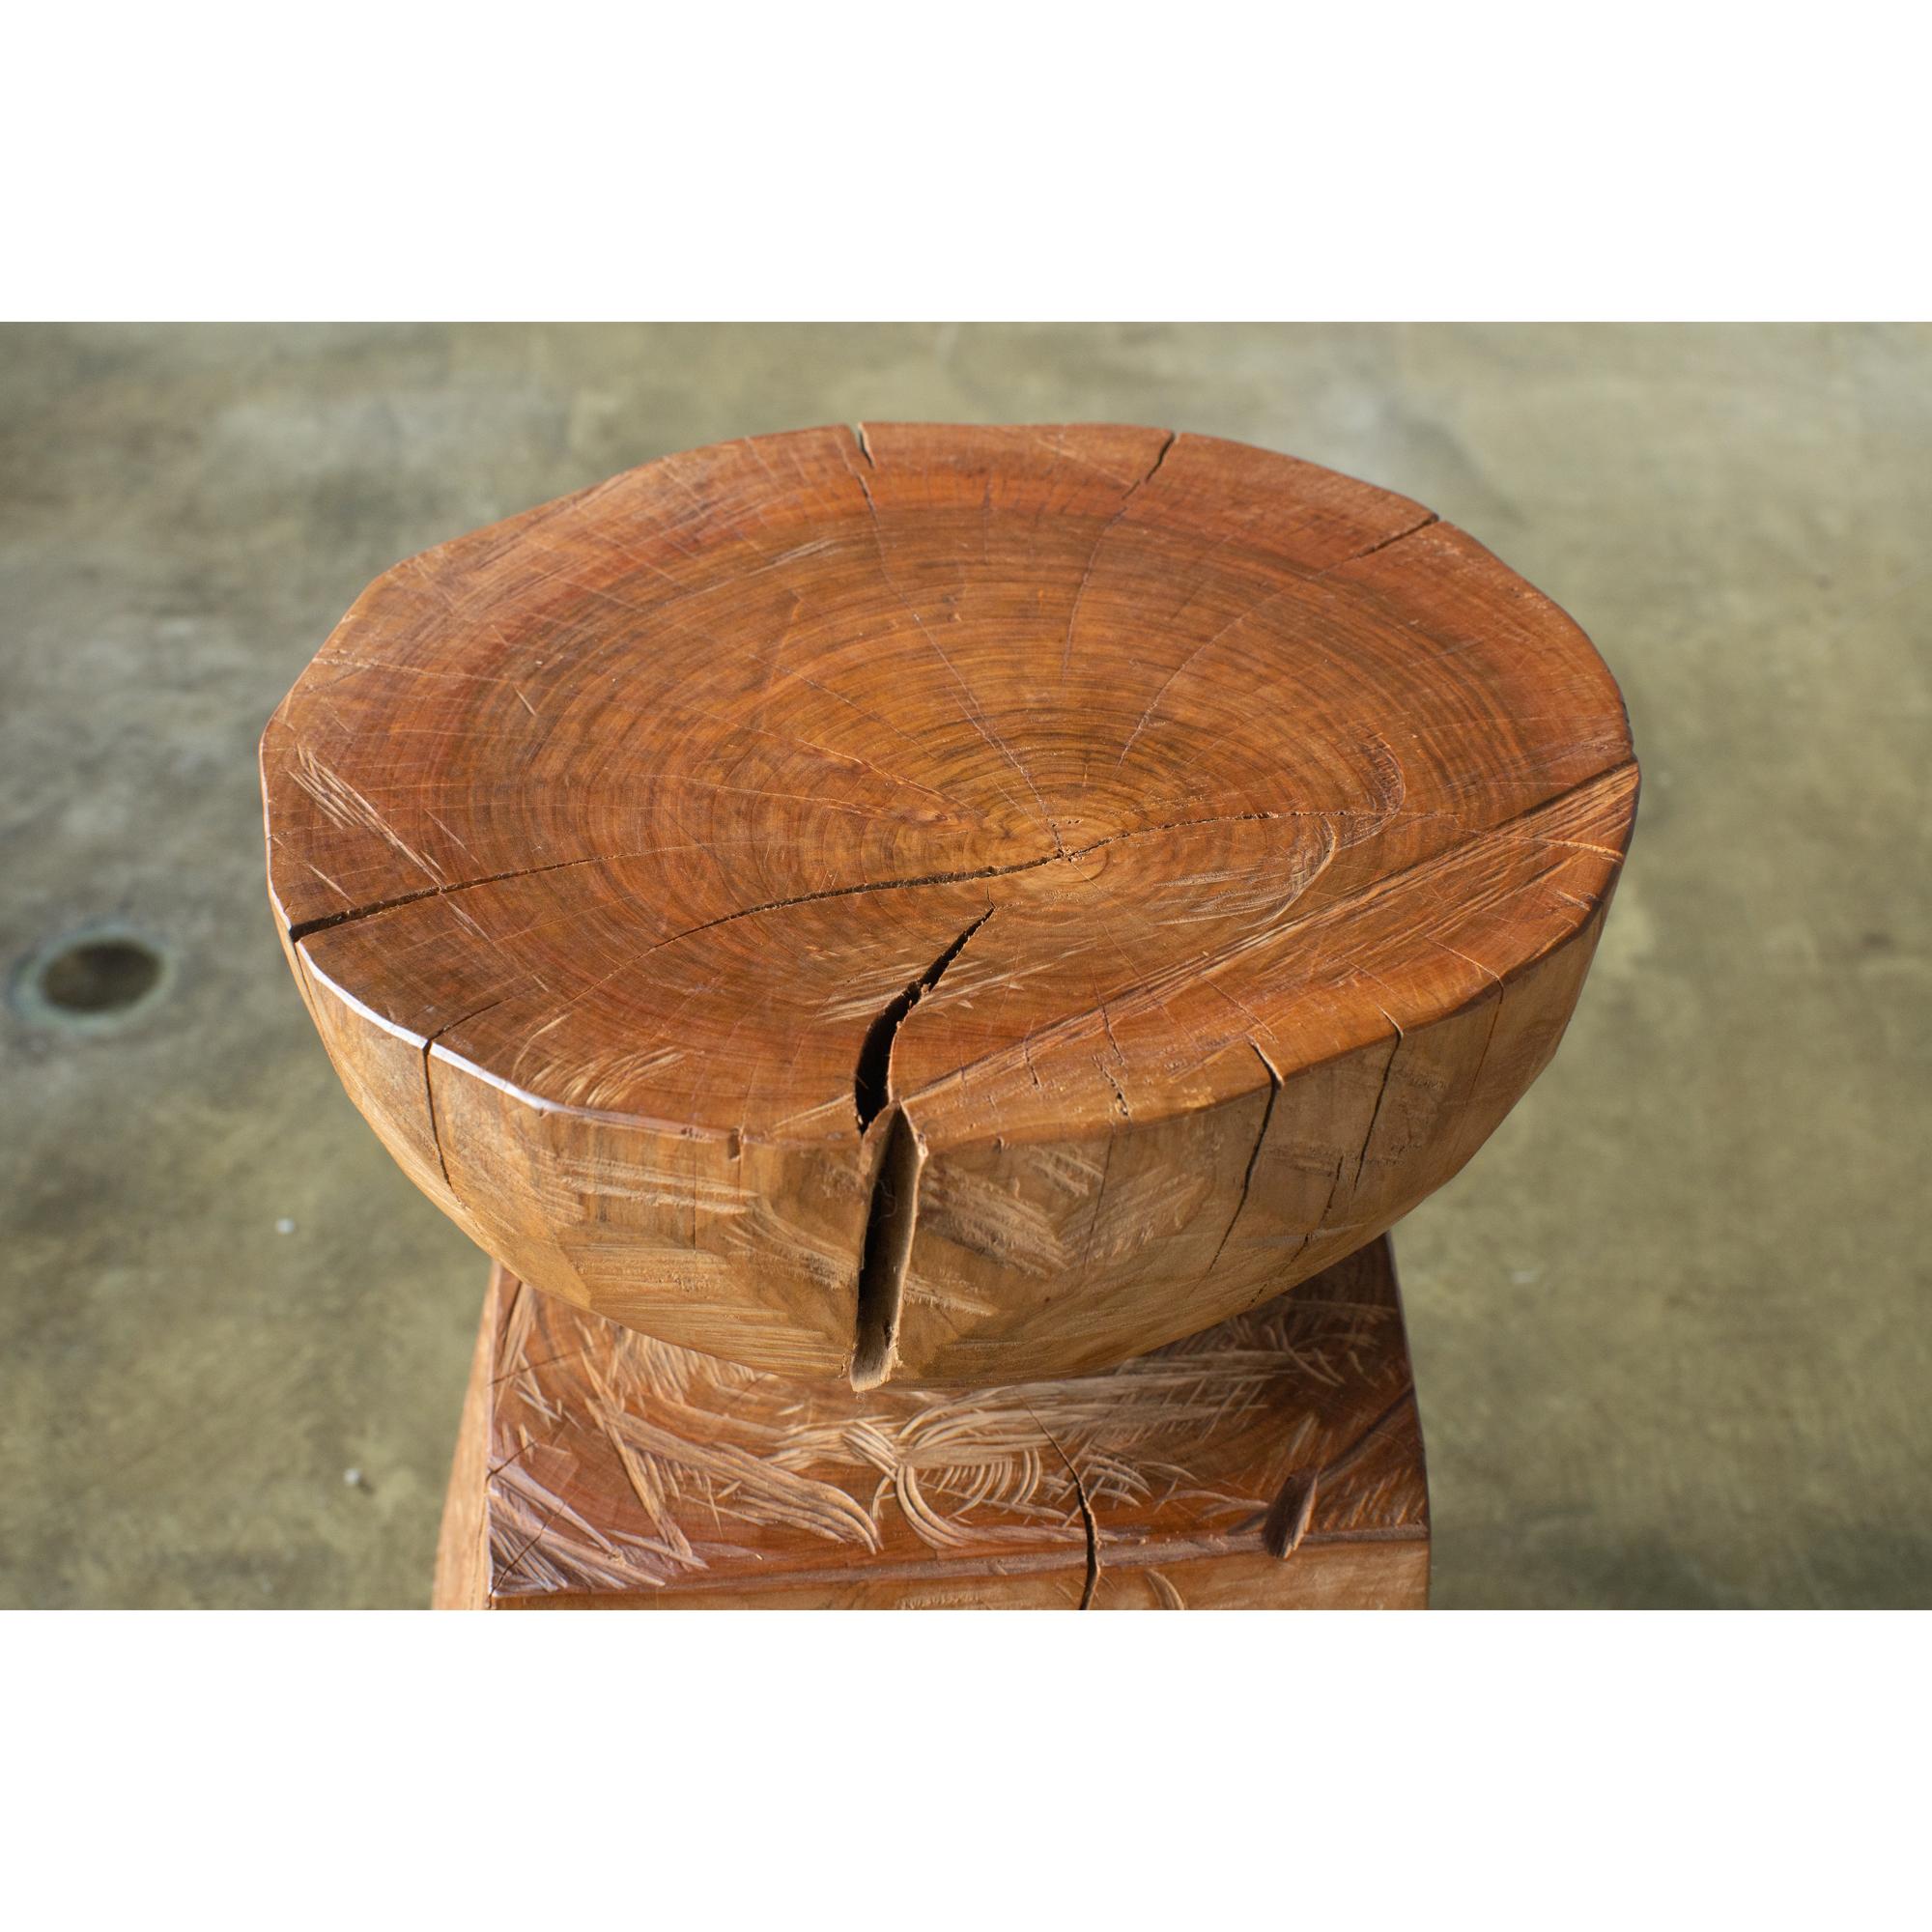 Contemporary Hiroyuki Nishimura and Zogei Furniture Sculptural Wood Stool11 Tribal Glamping